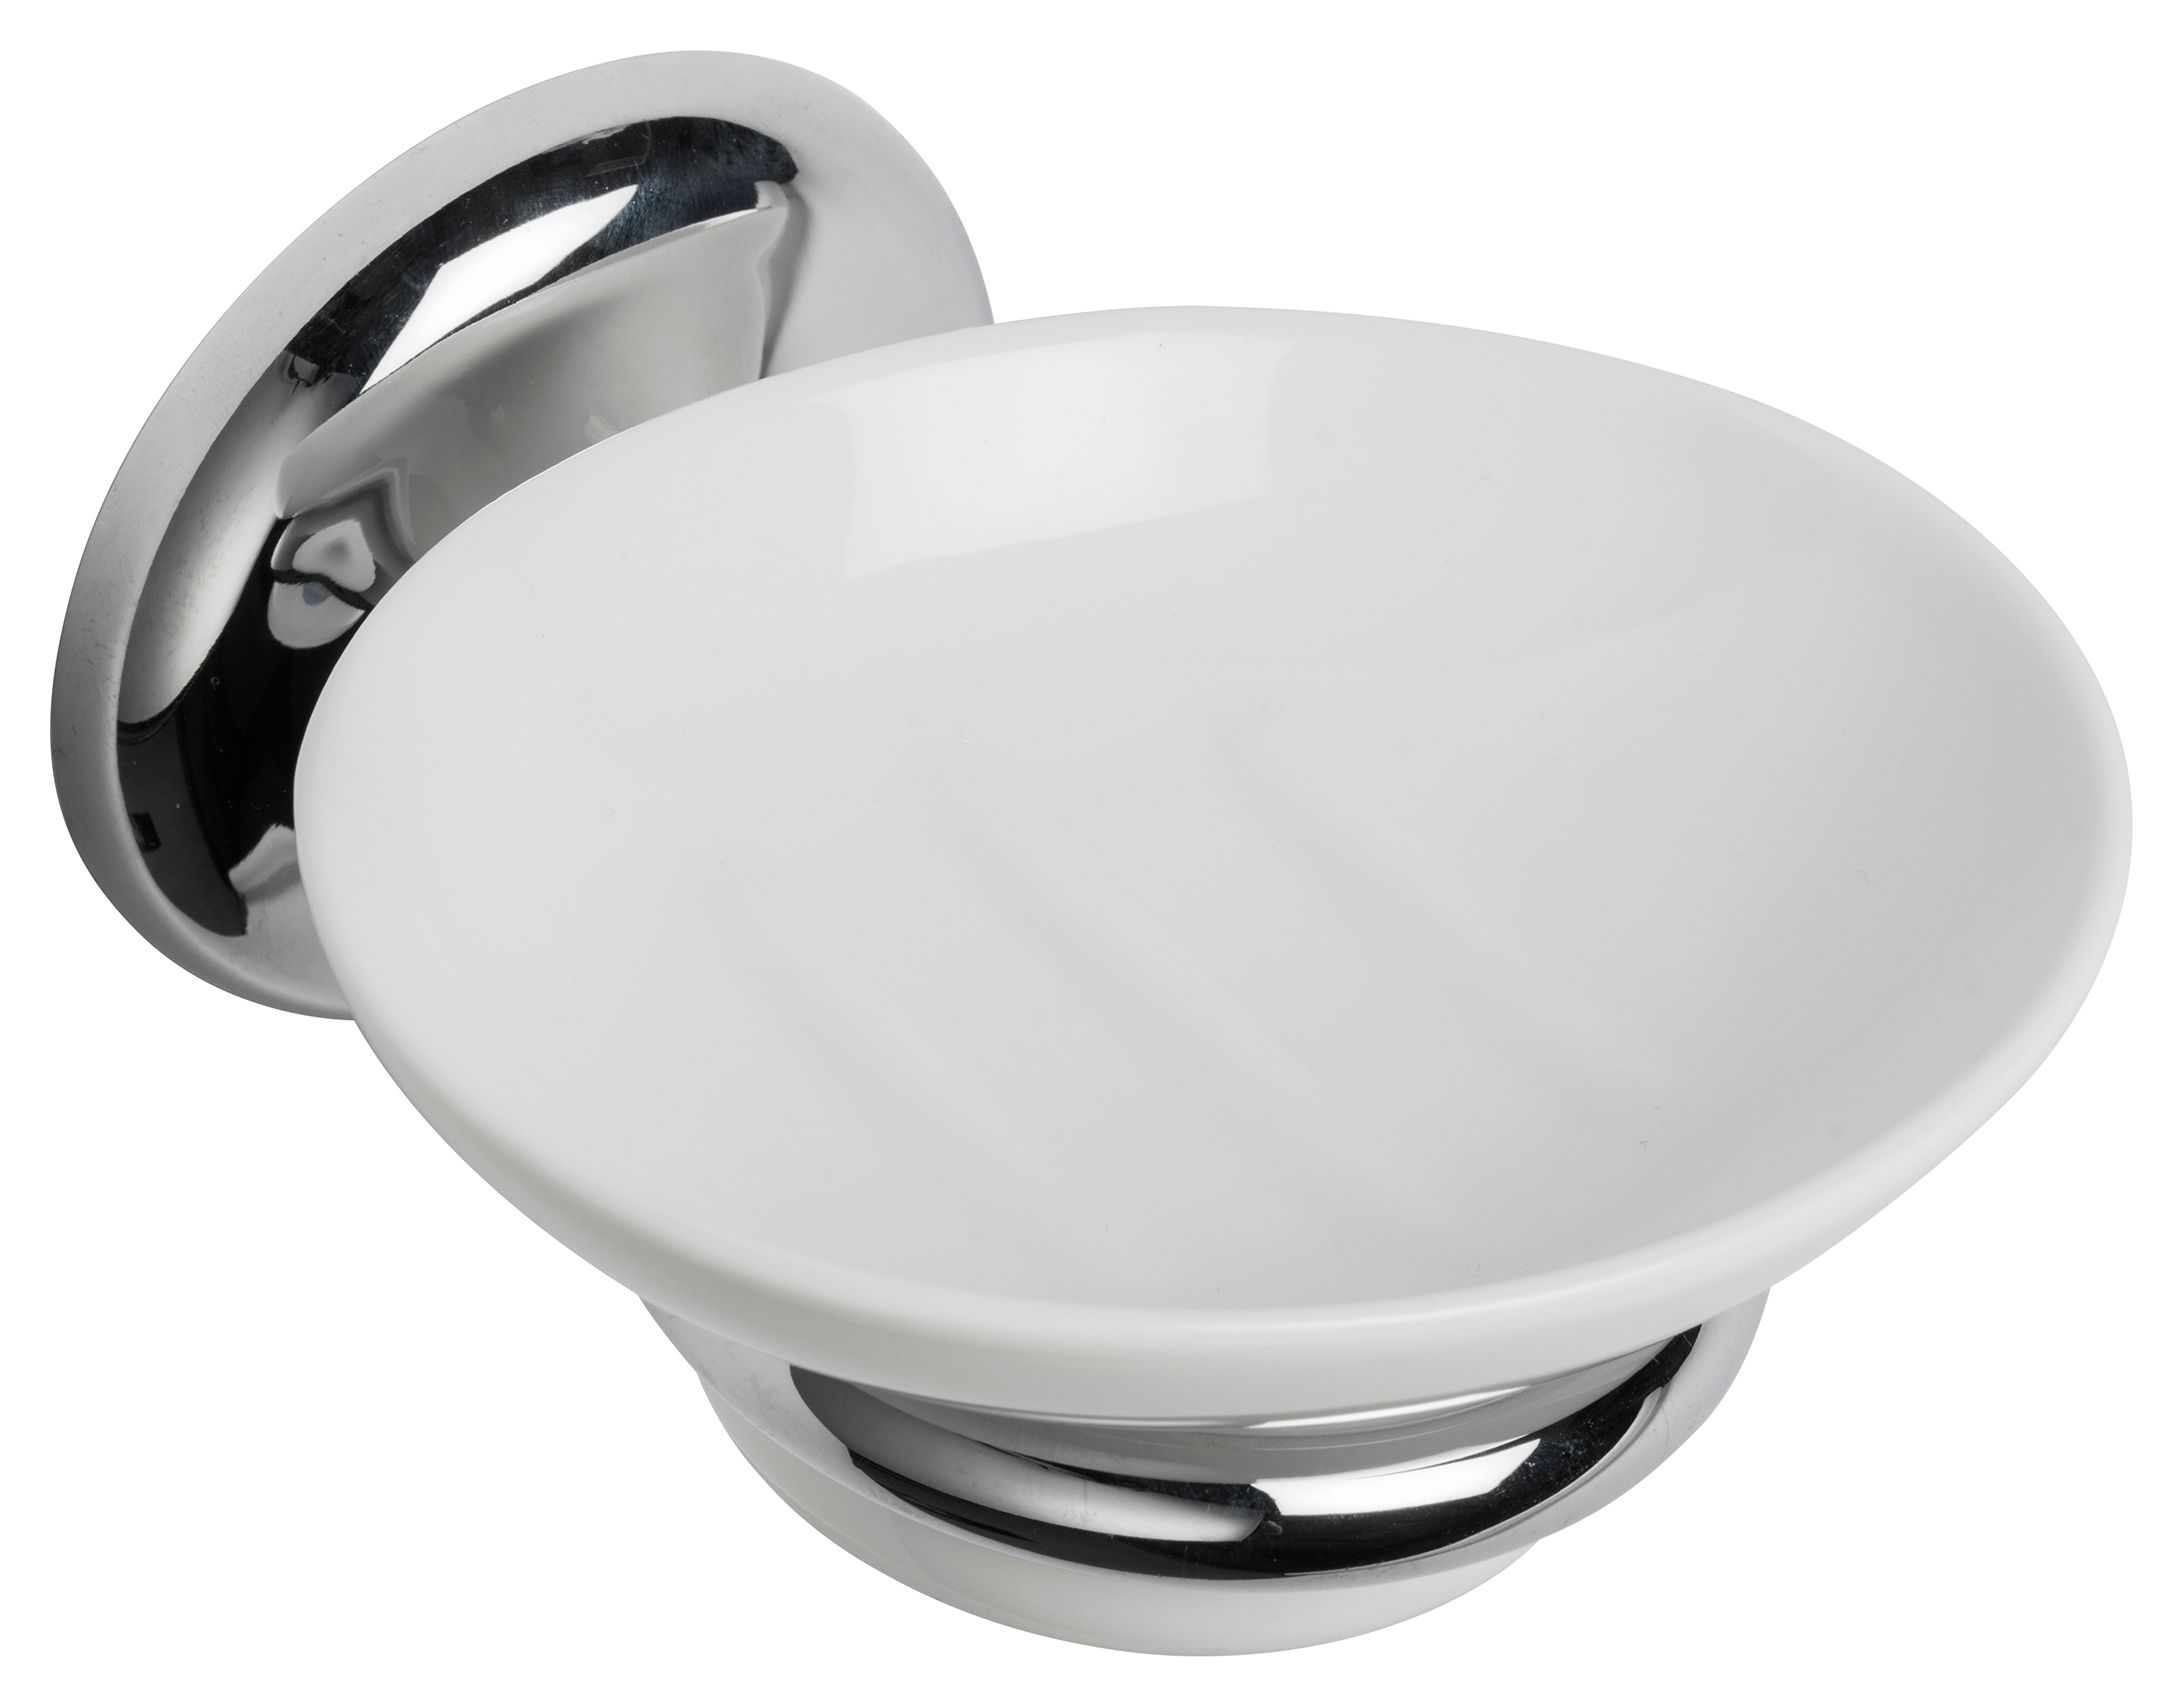 Croydex Flexi-Fix Grosvenor Bathroom Soap Dish & Holder - Chrome